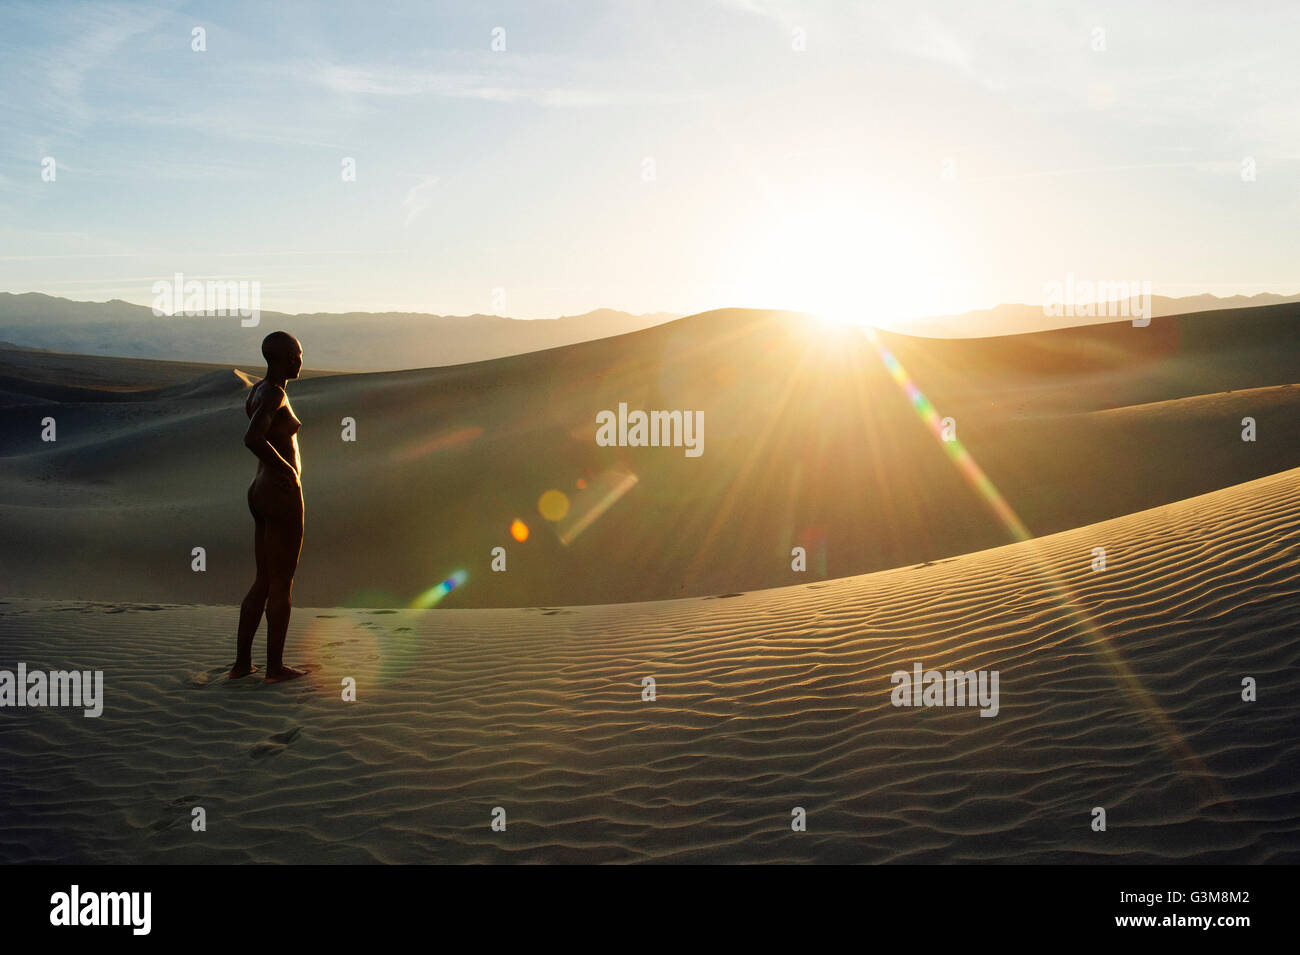 Nude woman in desert on sand dune looking away Stock Photo